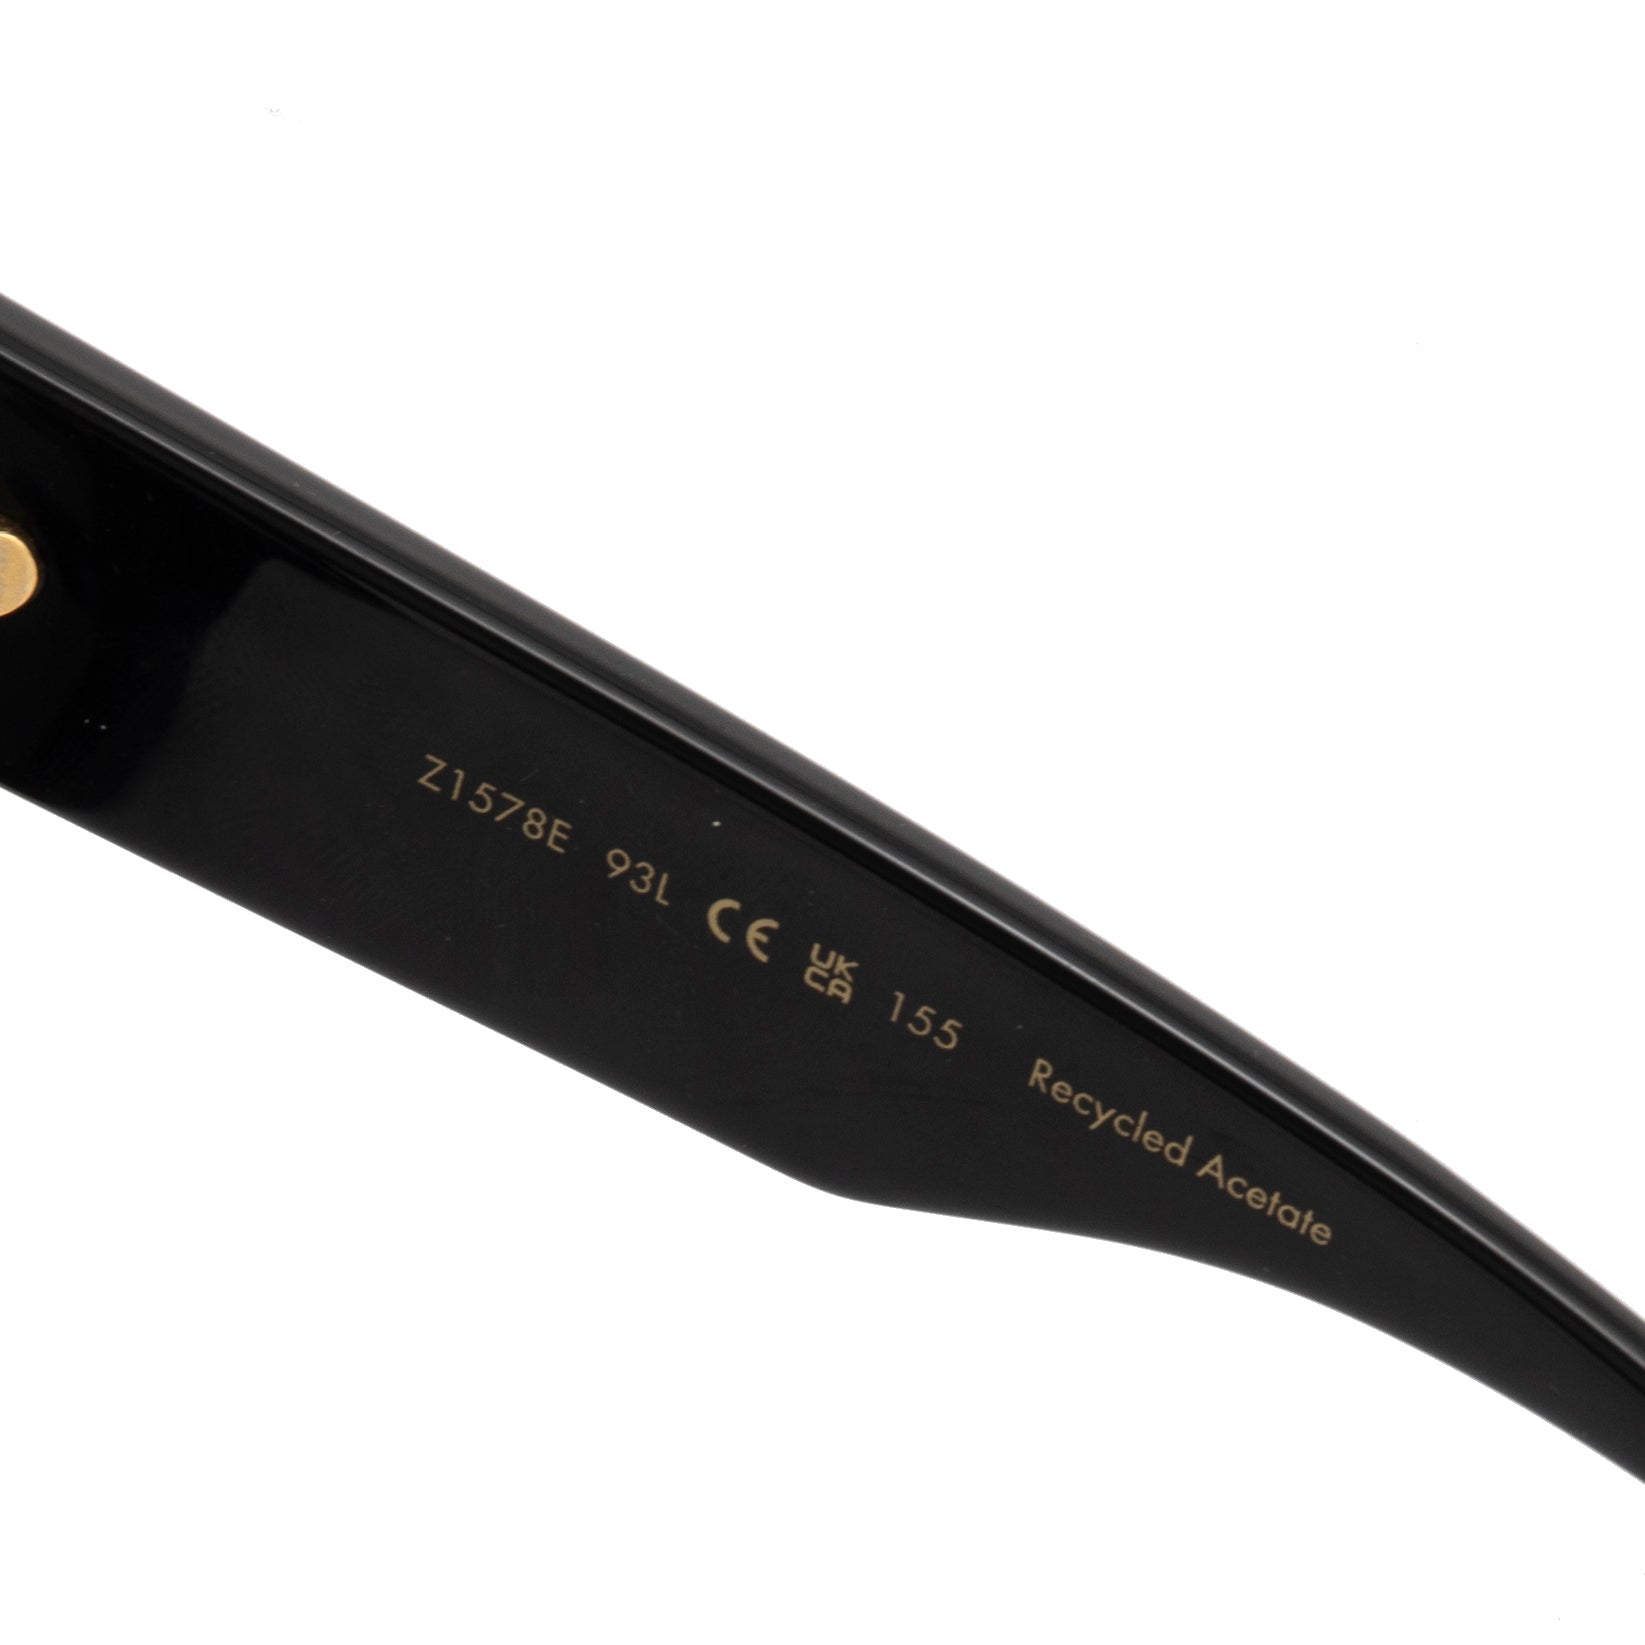 Louis Vuitton Cyclone Sunglasses Beige - SS22 - US